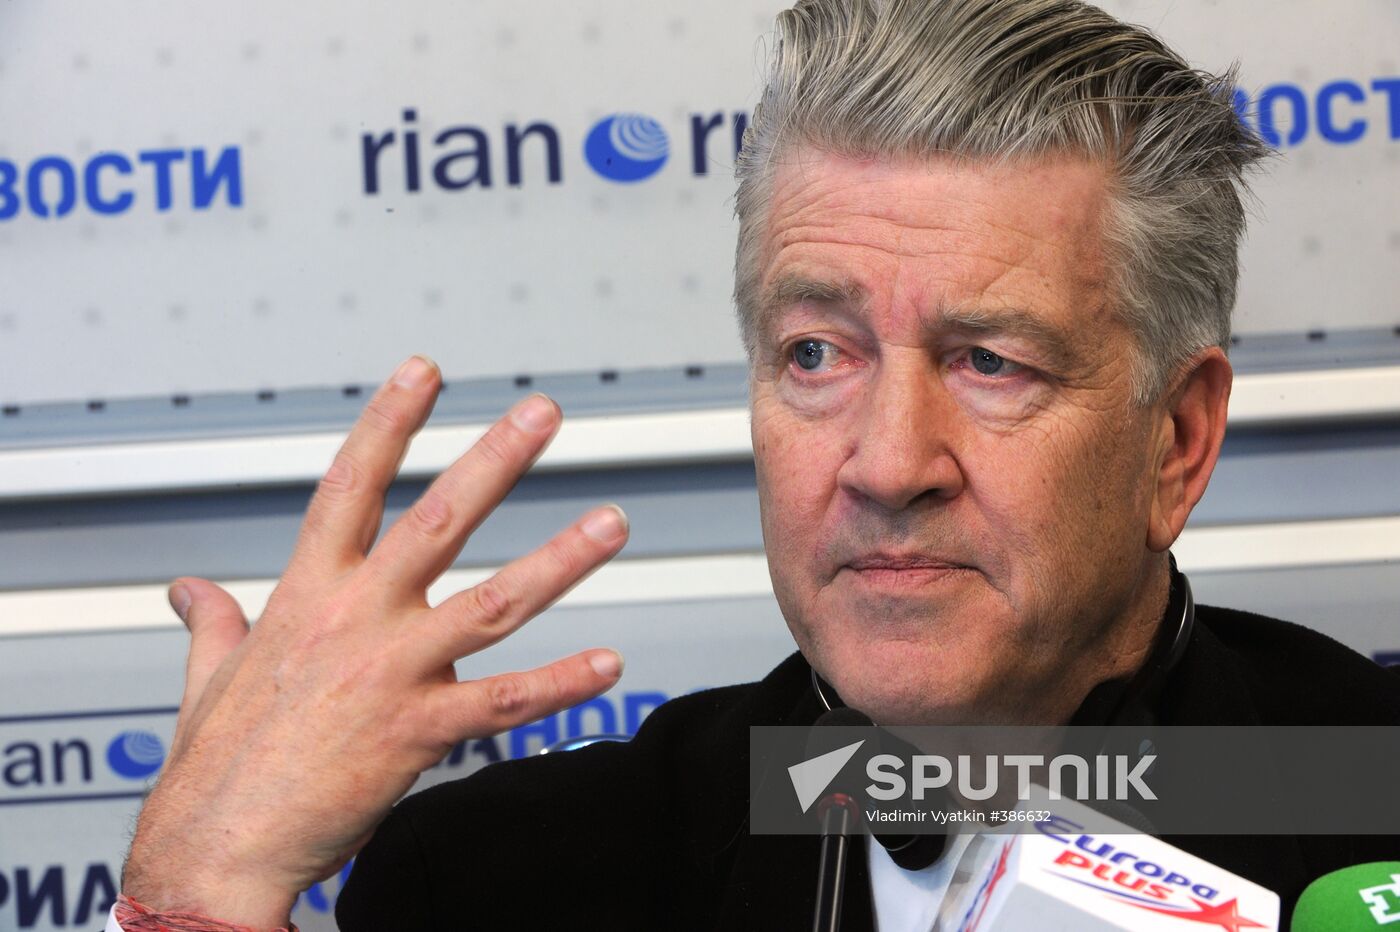 David Lynch holding press conference at RIA Novosti